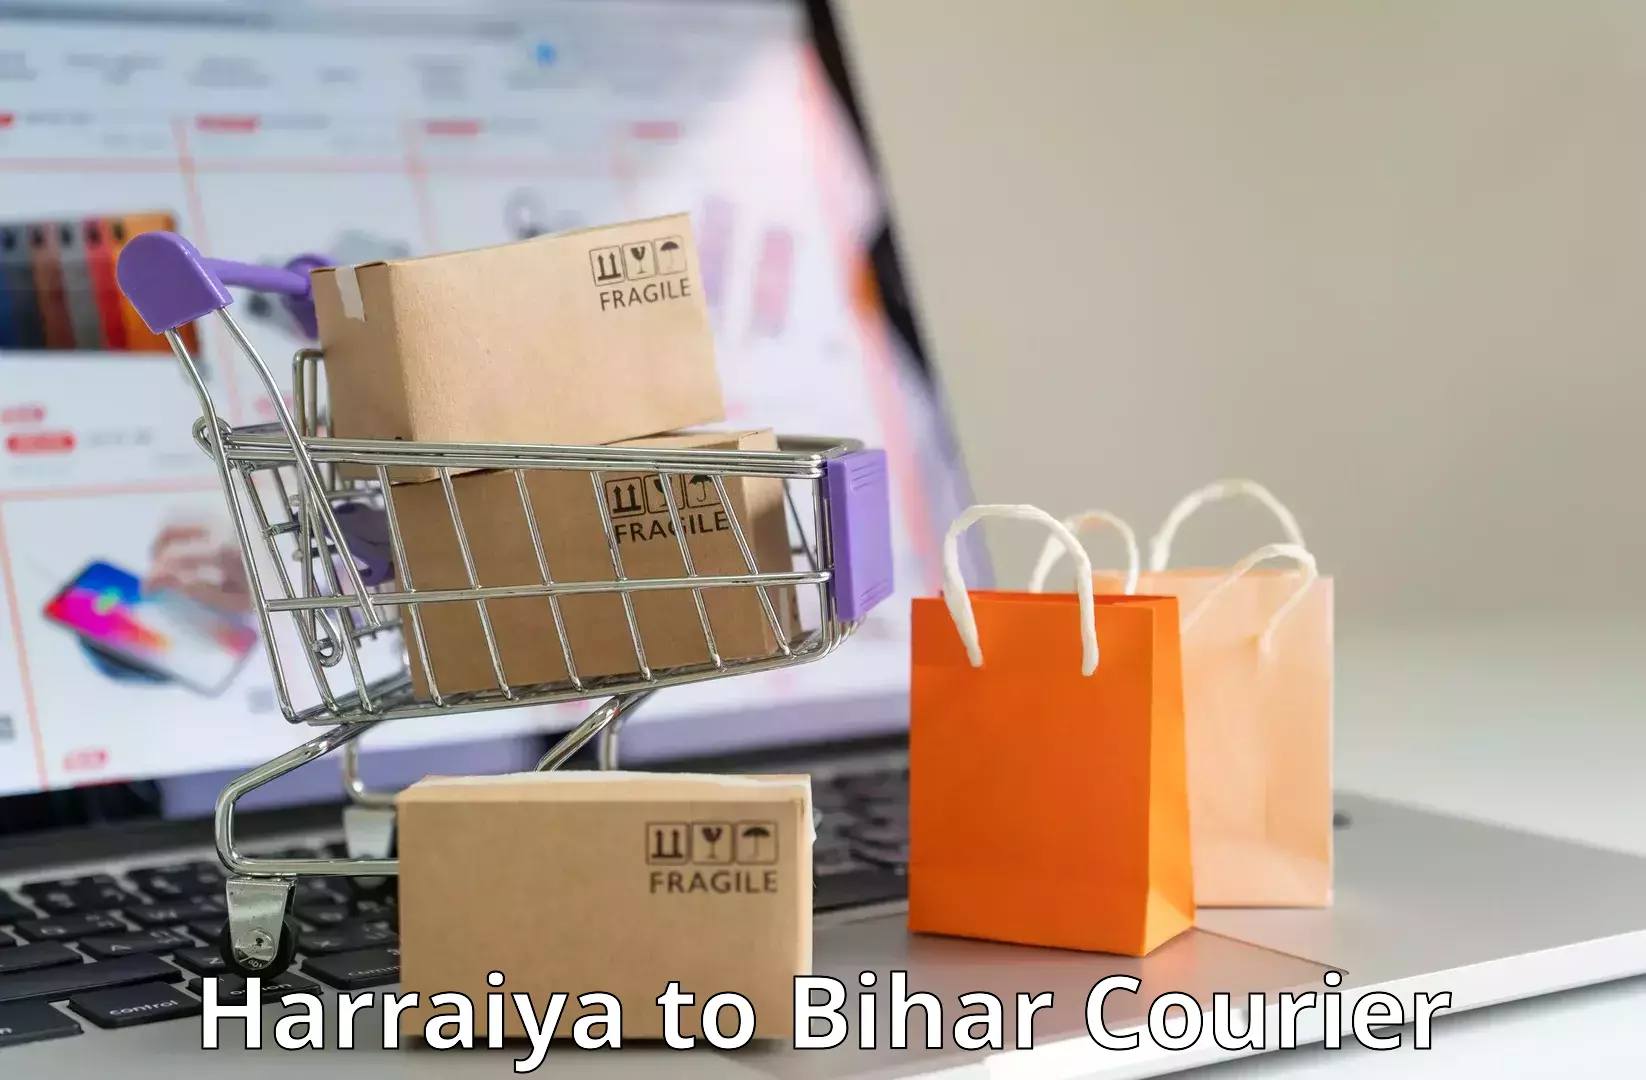 Express postal services Harraiya to Bihar